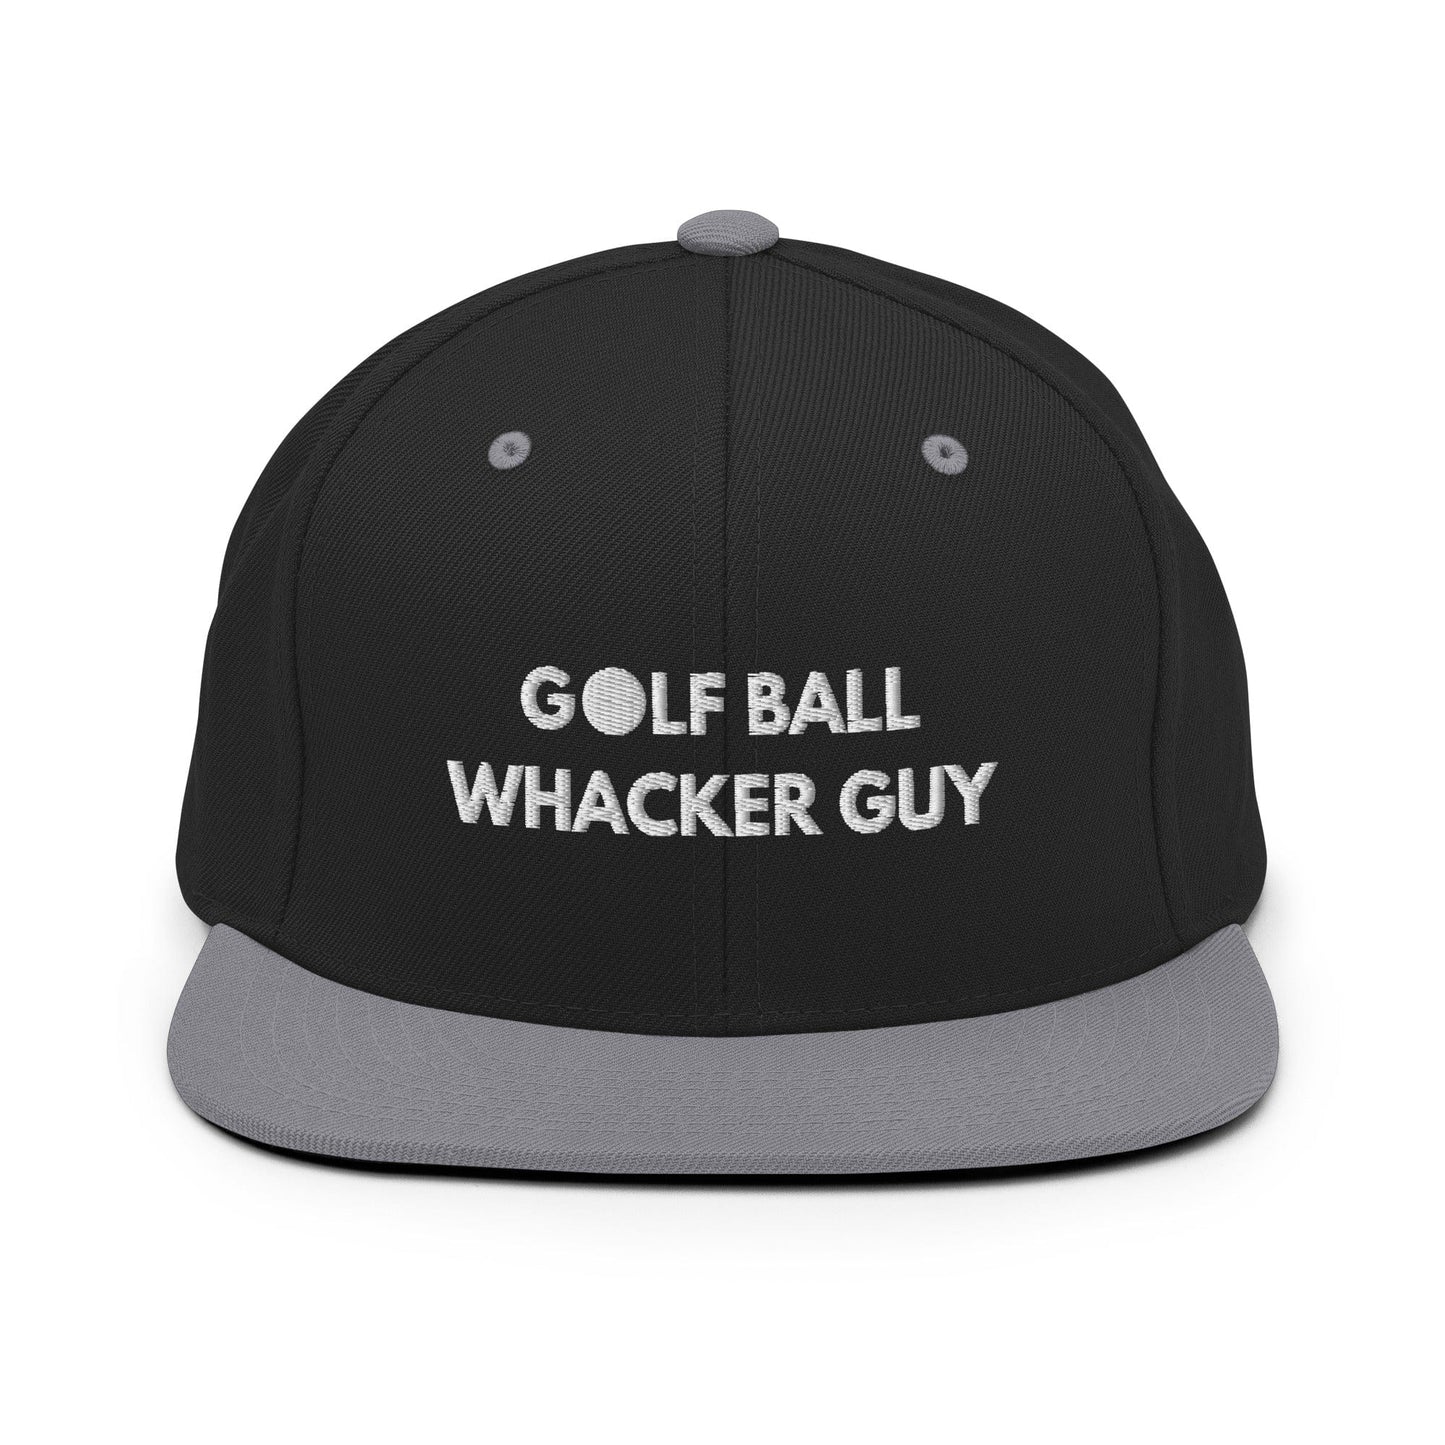 Funny Golfer Gifts  Snapback Hat Black/ Silver Golf Ball Whacker Guy Hat Snapback Hat